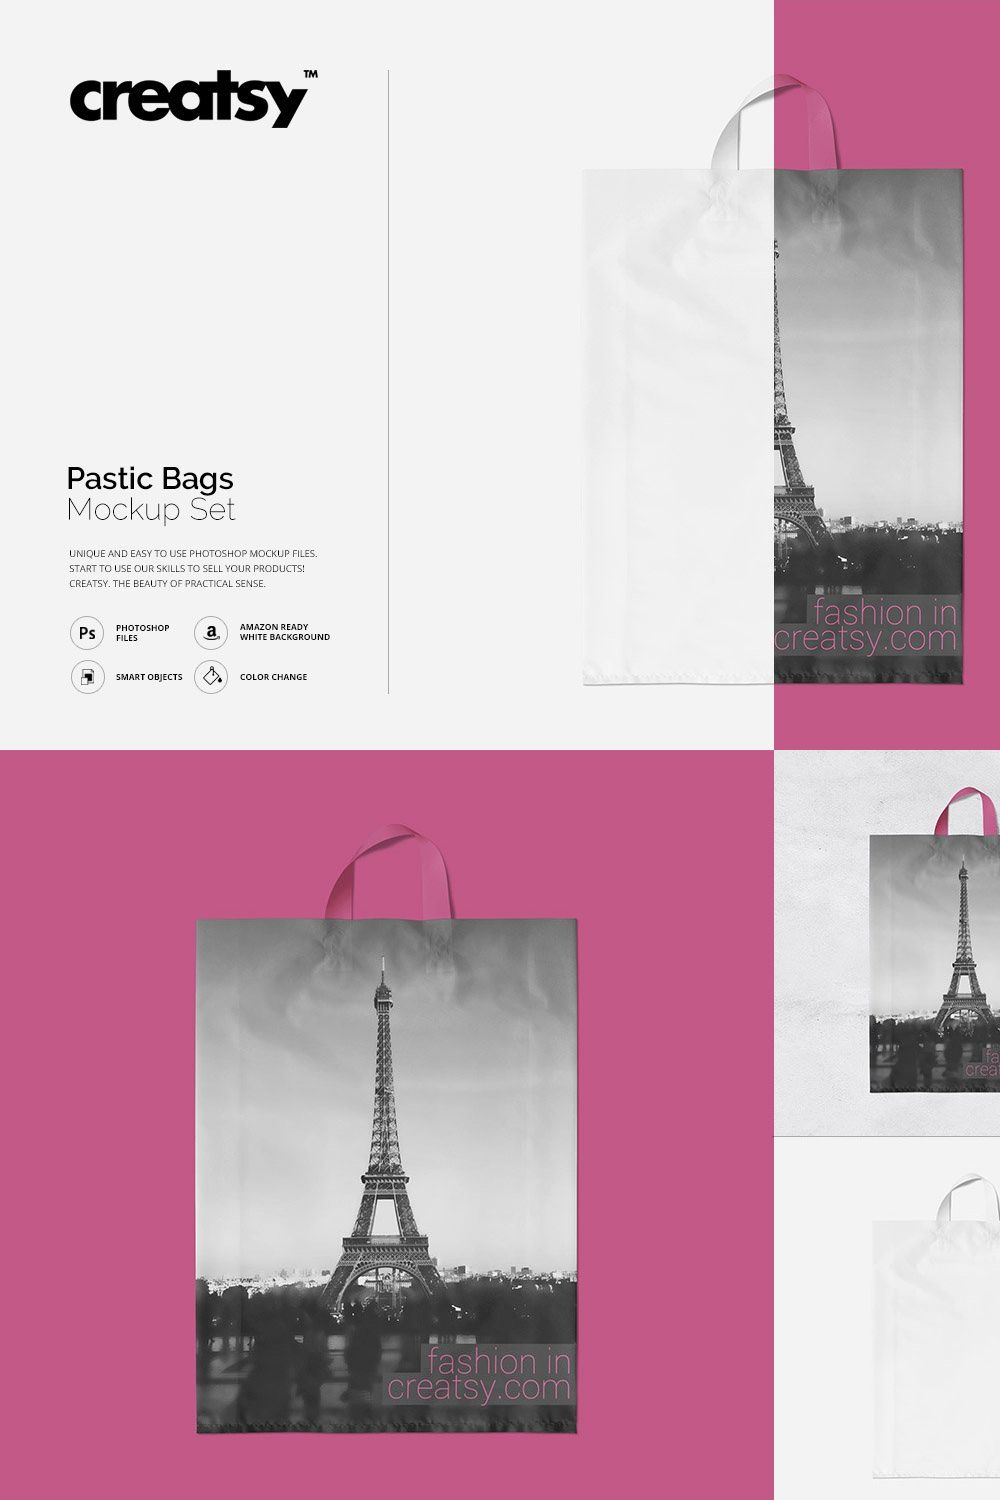 Plastic Bags Mockup Set pinterest preview image.